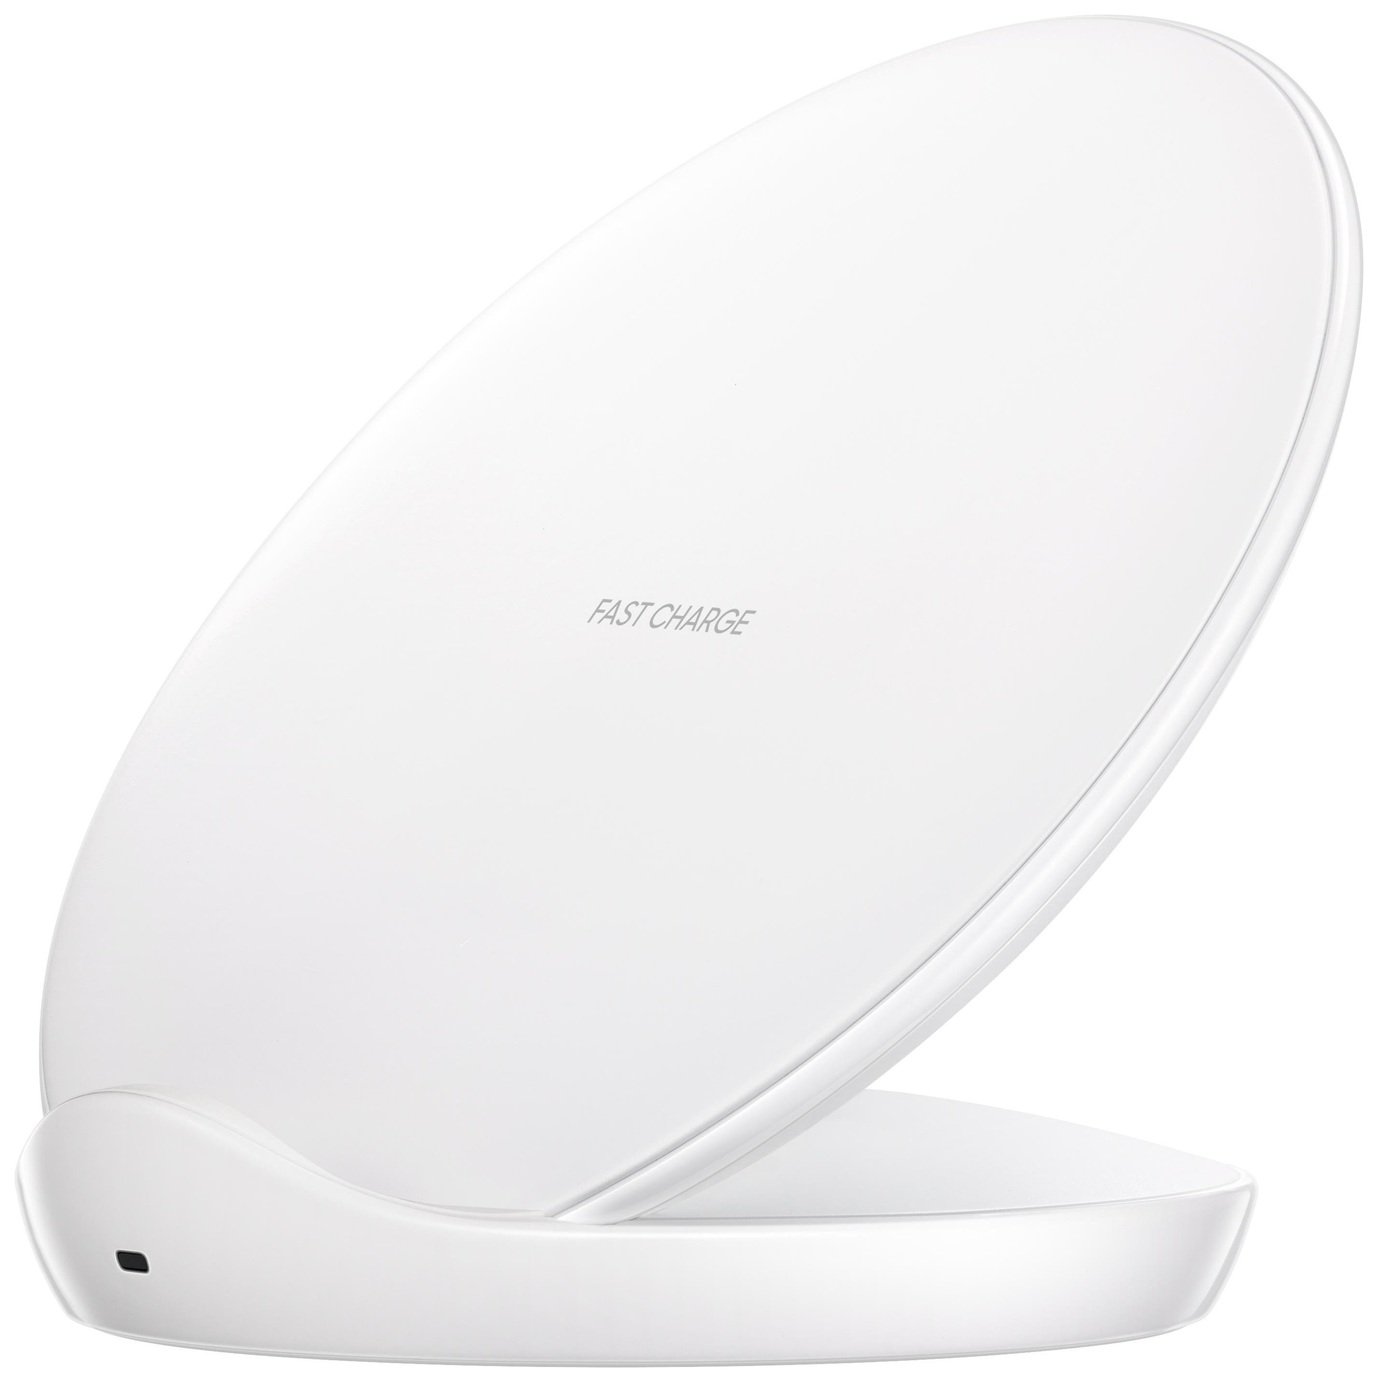 Samsung Galaxy Wireless Charging Stand - White